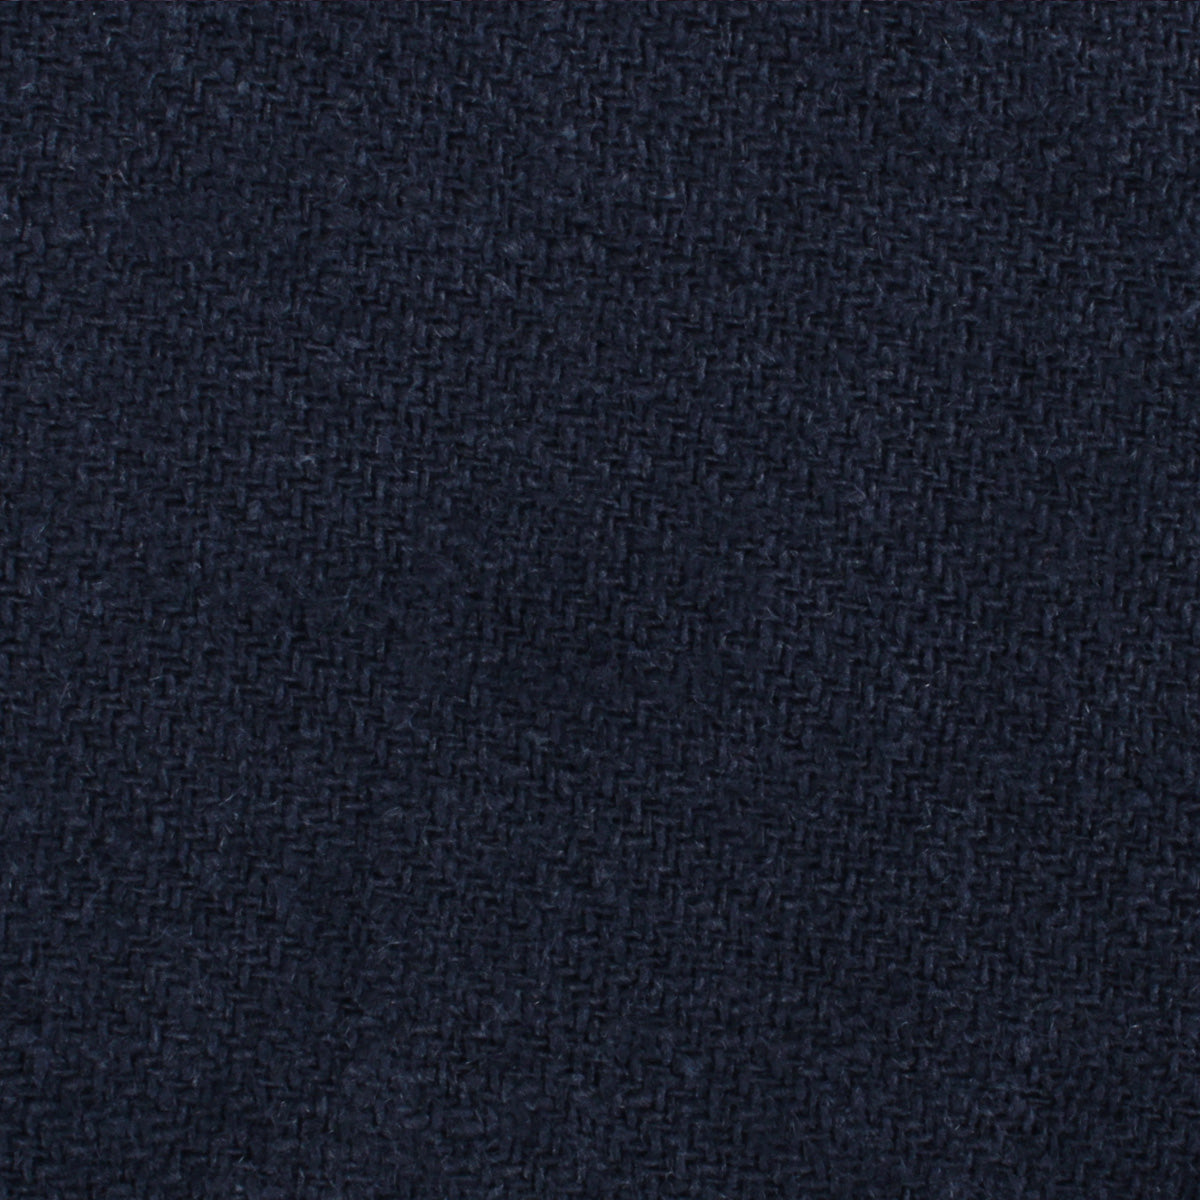 Midnight Blue-Black Linen Pocket Square Fabric